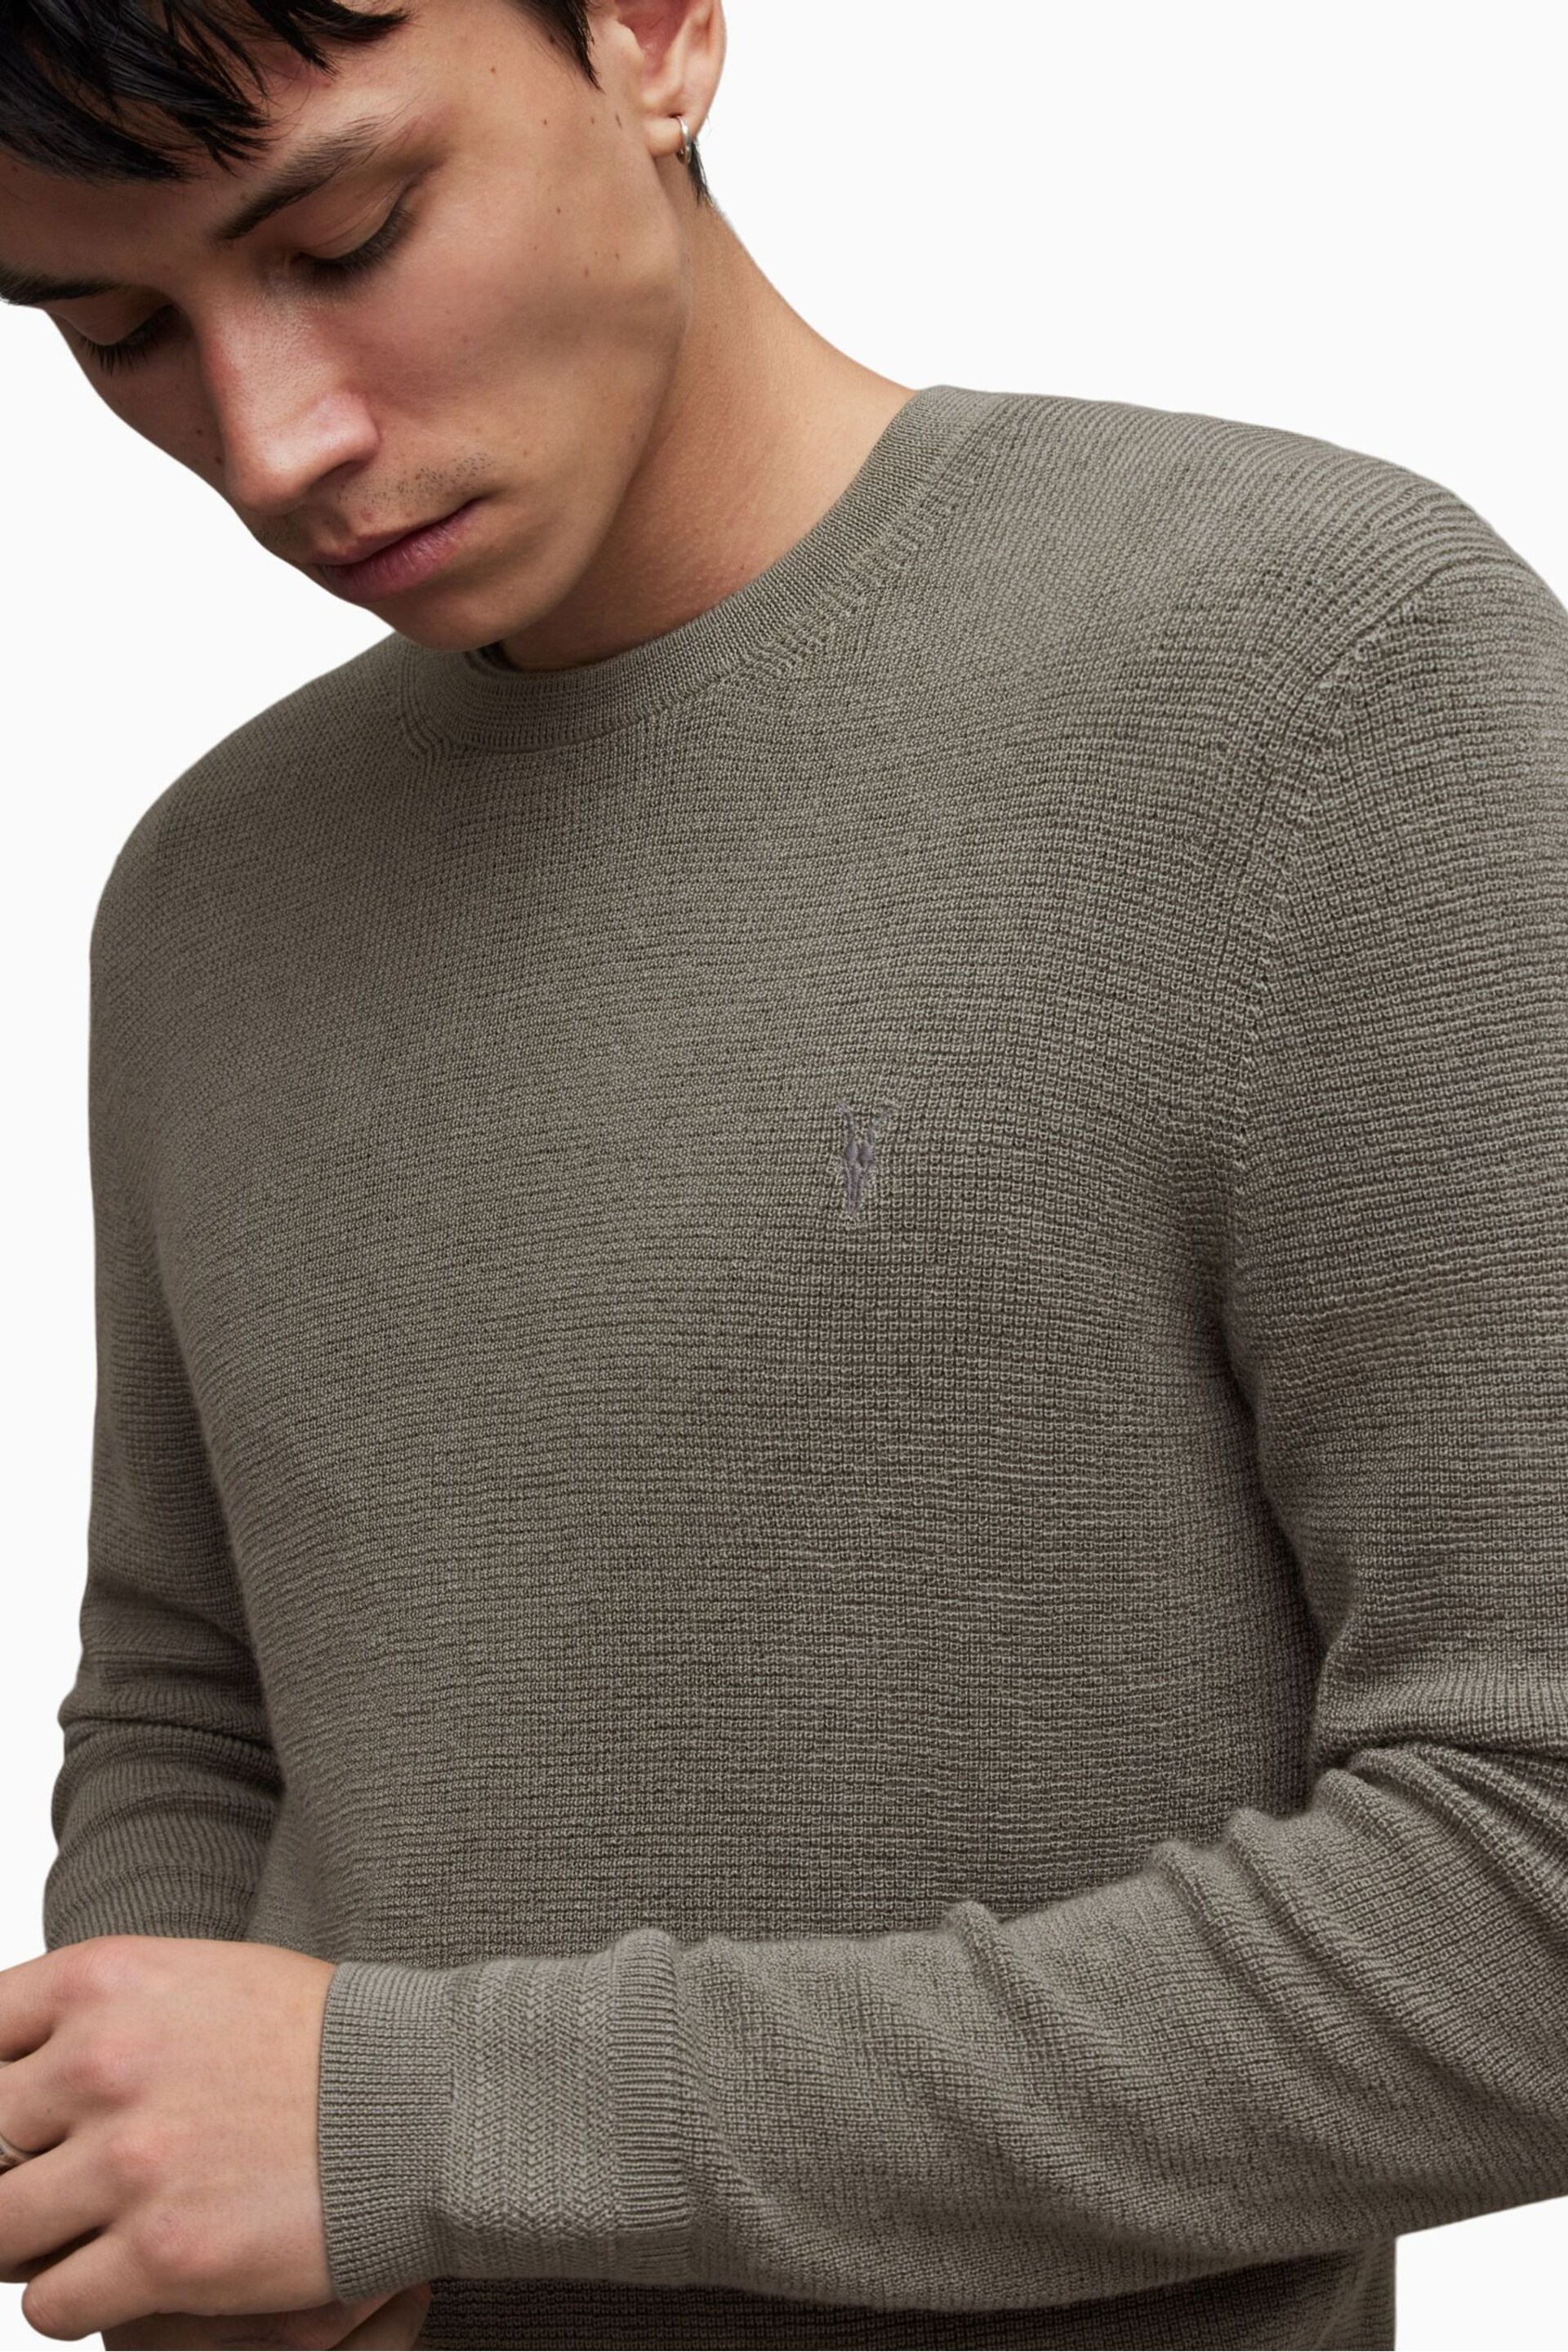 AllSaints Grey Ivar Merino Crew Neck Sweater - Image 6 of 7